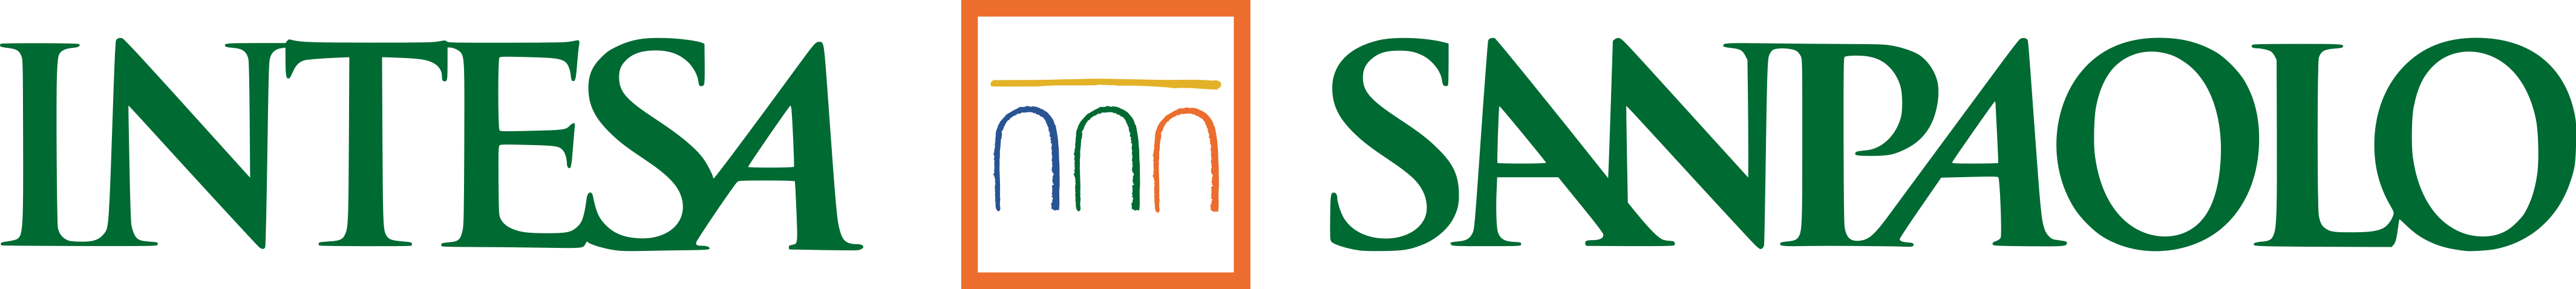 4258px Intesa Sanpaolo Logo.svg